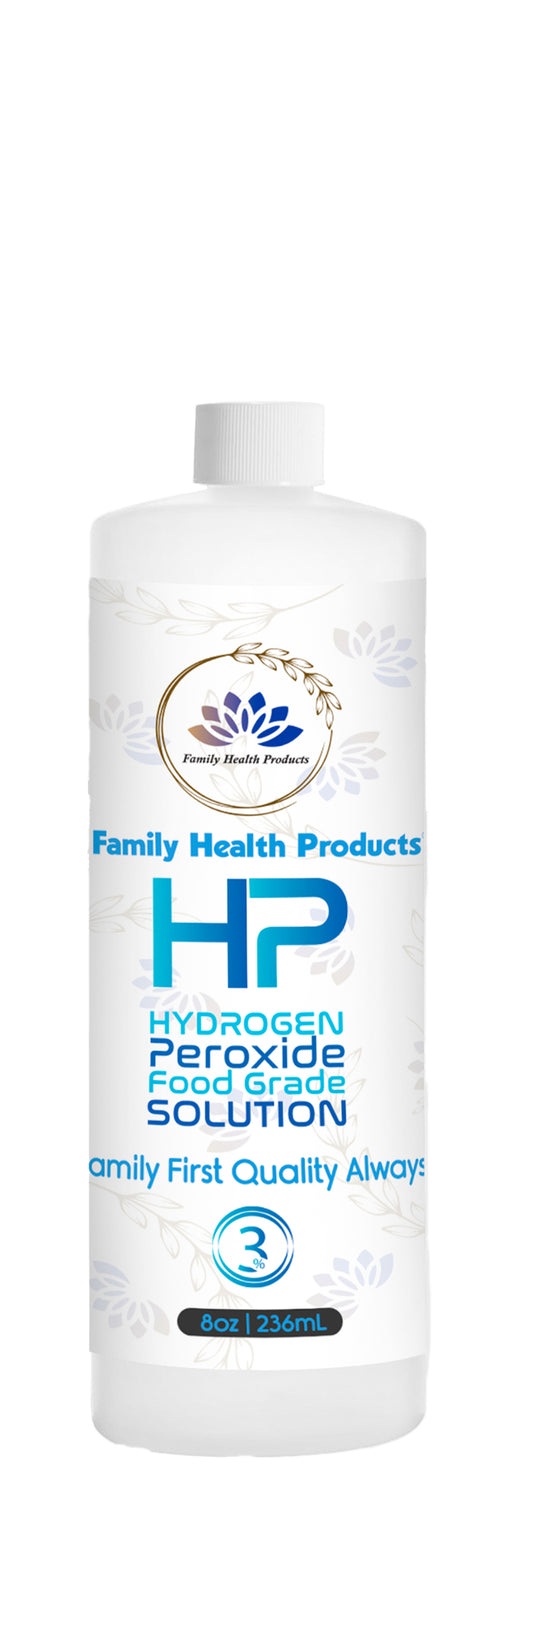 Hydrogen Peroxide 6% 8oz Premium Teeth Whitening Food Grade Mouthwash